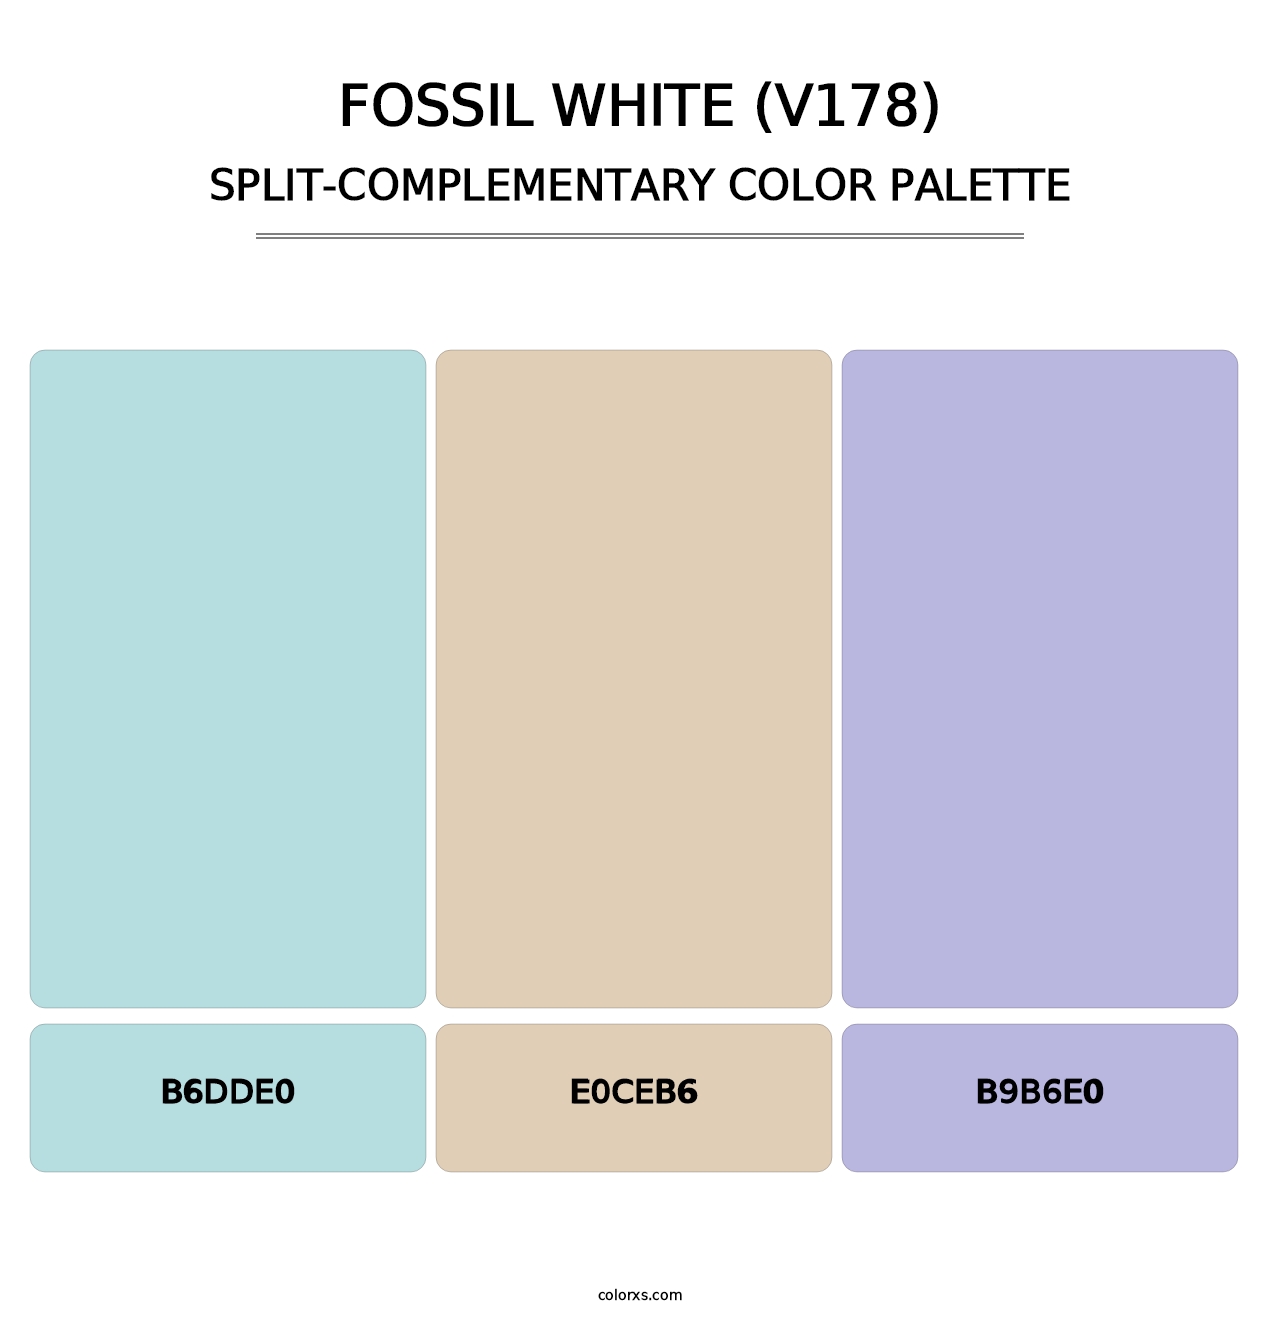 Fossil White (V178) - Split-Complementary Color Palette